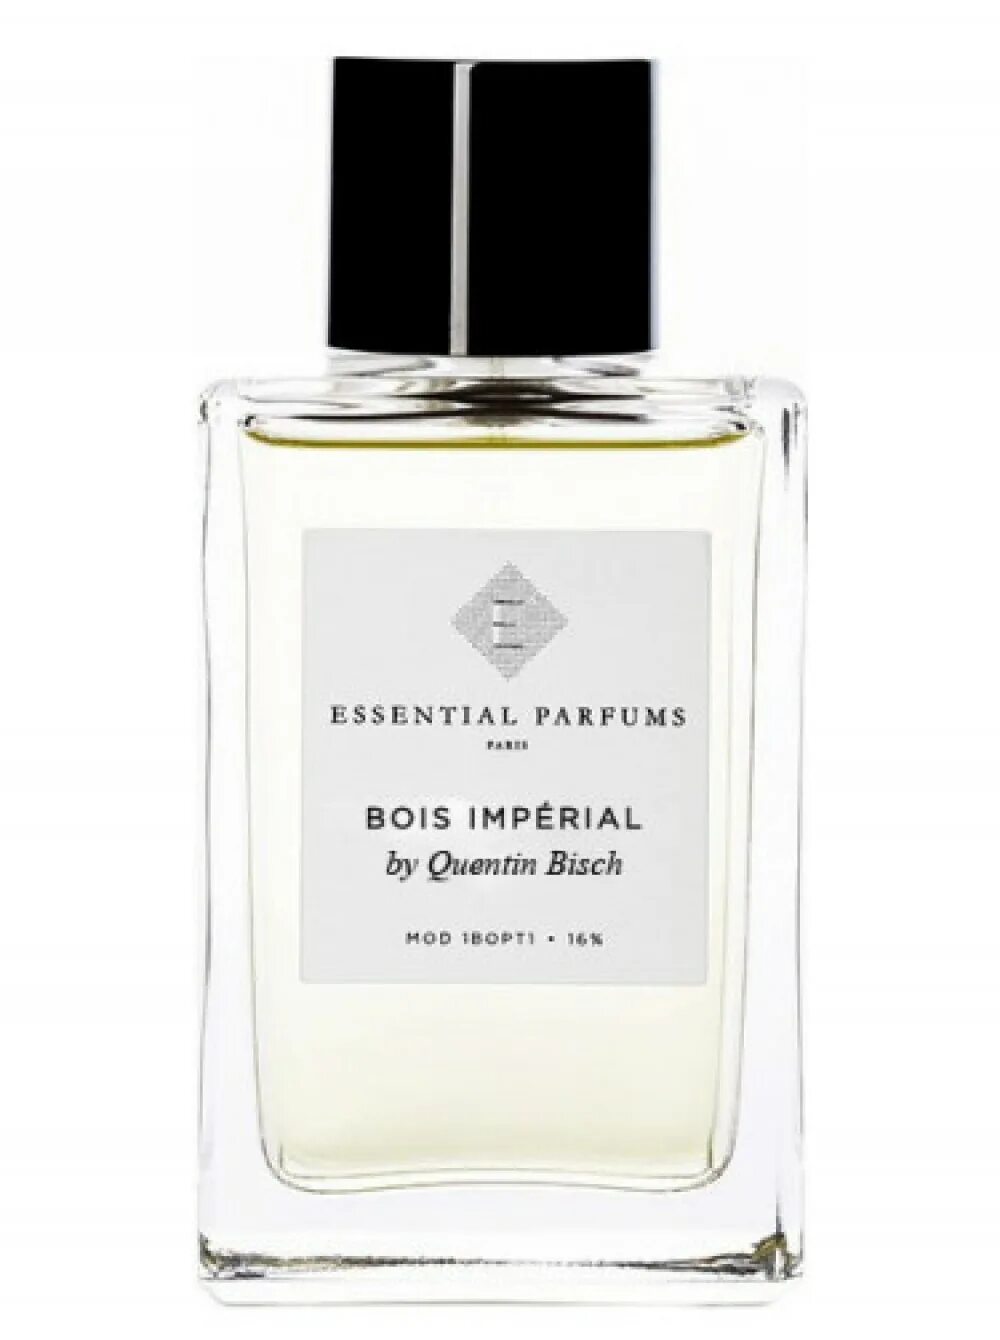 Essential Parfums mon Vetiver EDP 100 ml. Essential Parfums Orange Santal. Essential Parfums bois Imperial. Essential Parfums nice Bergamote. Bois imperial limited